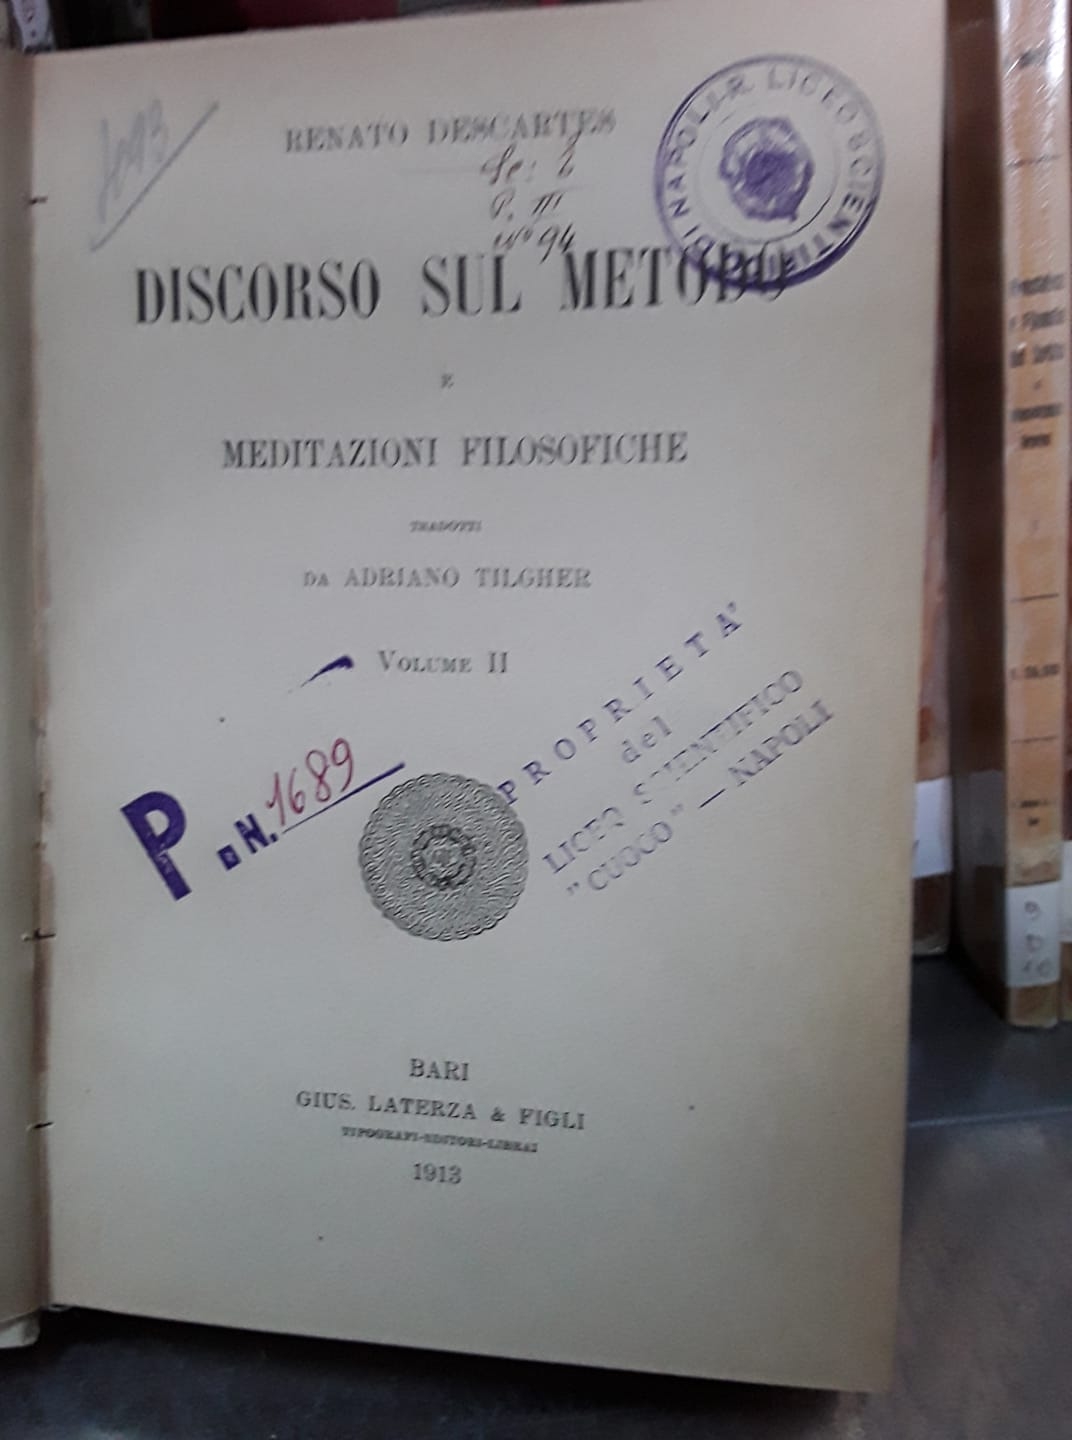 Cartesio - Discorso sul Metodo 1913